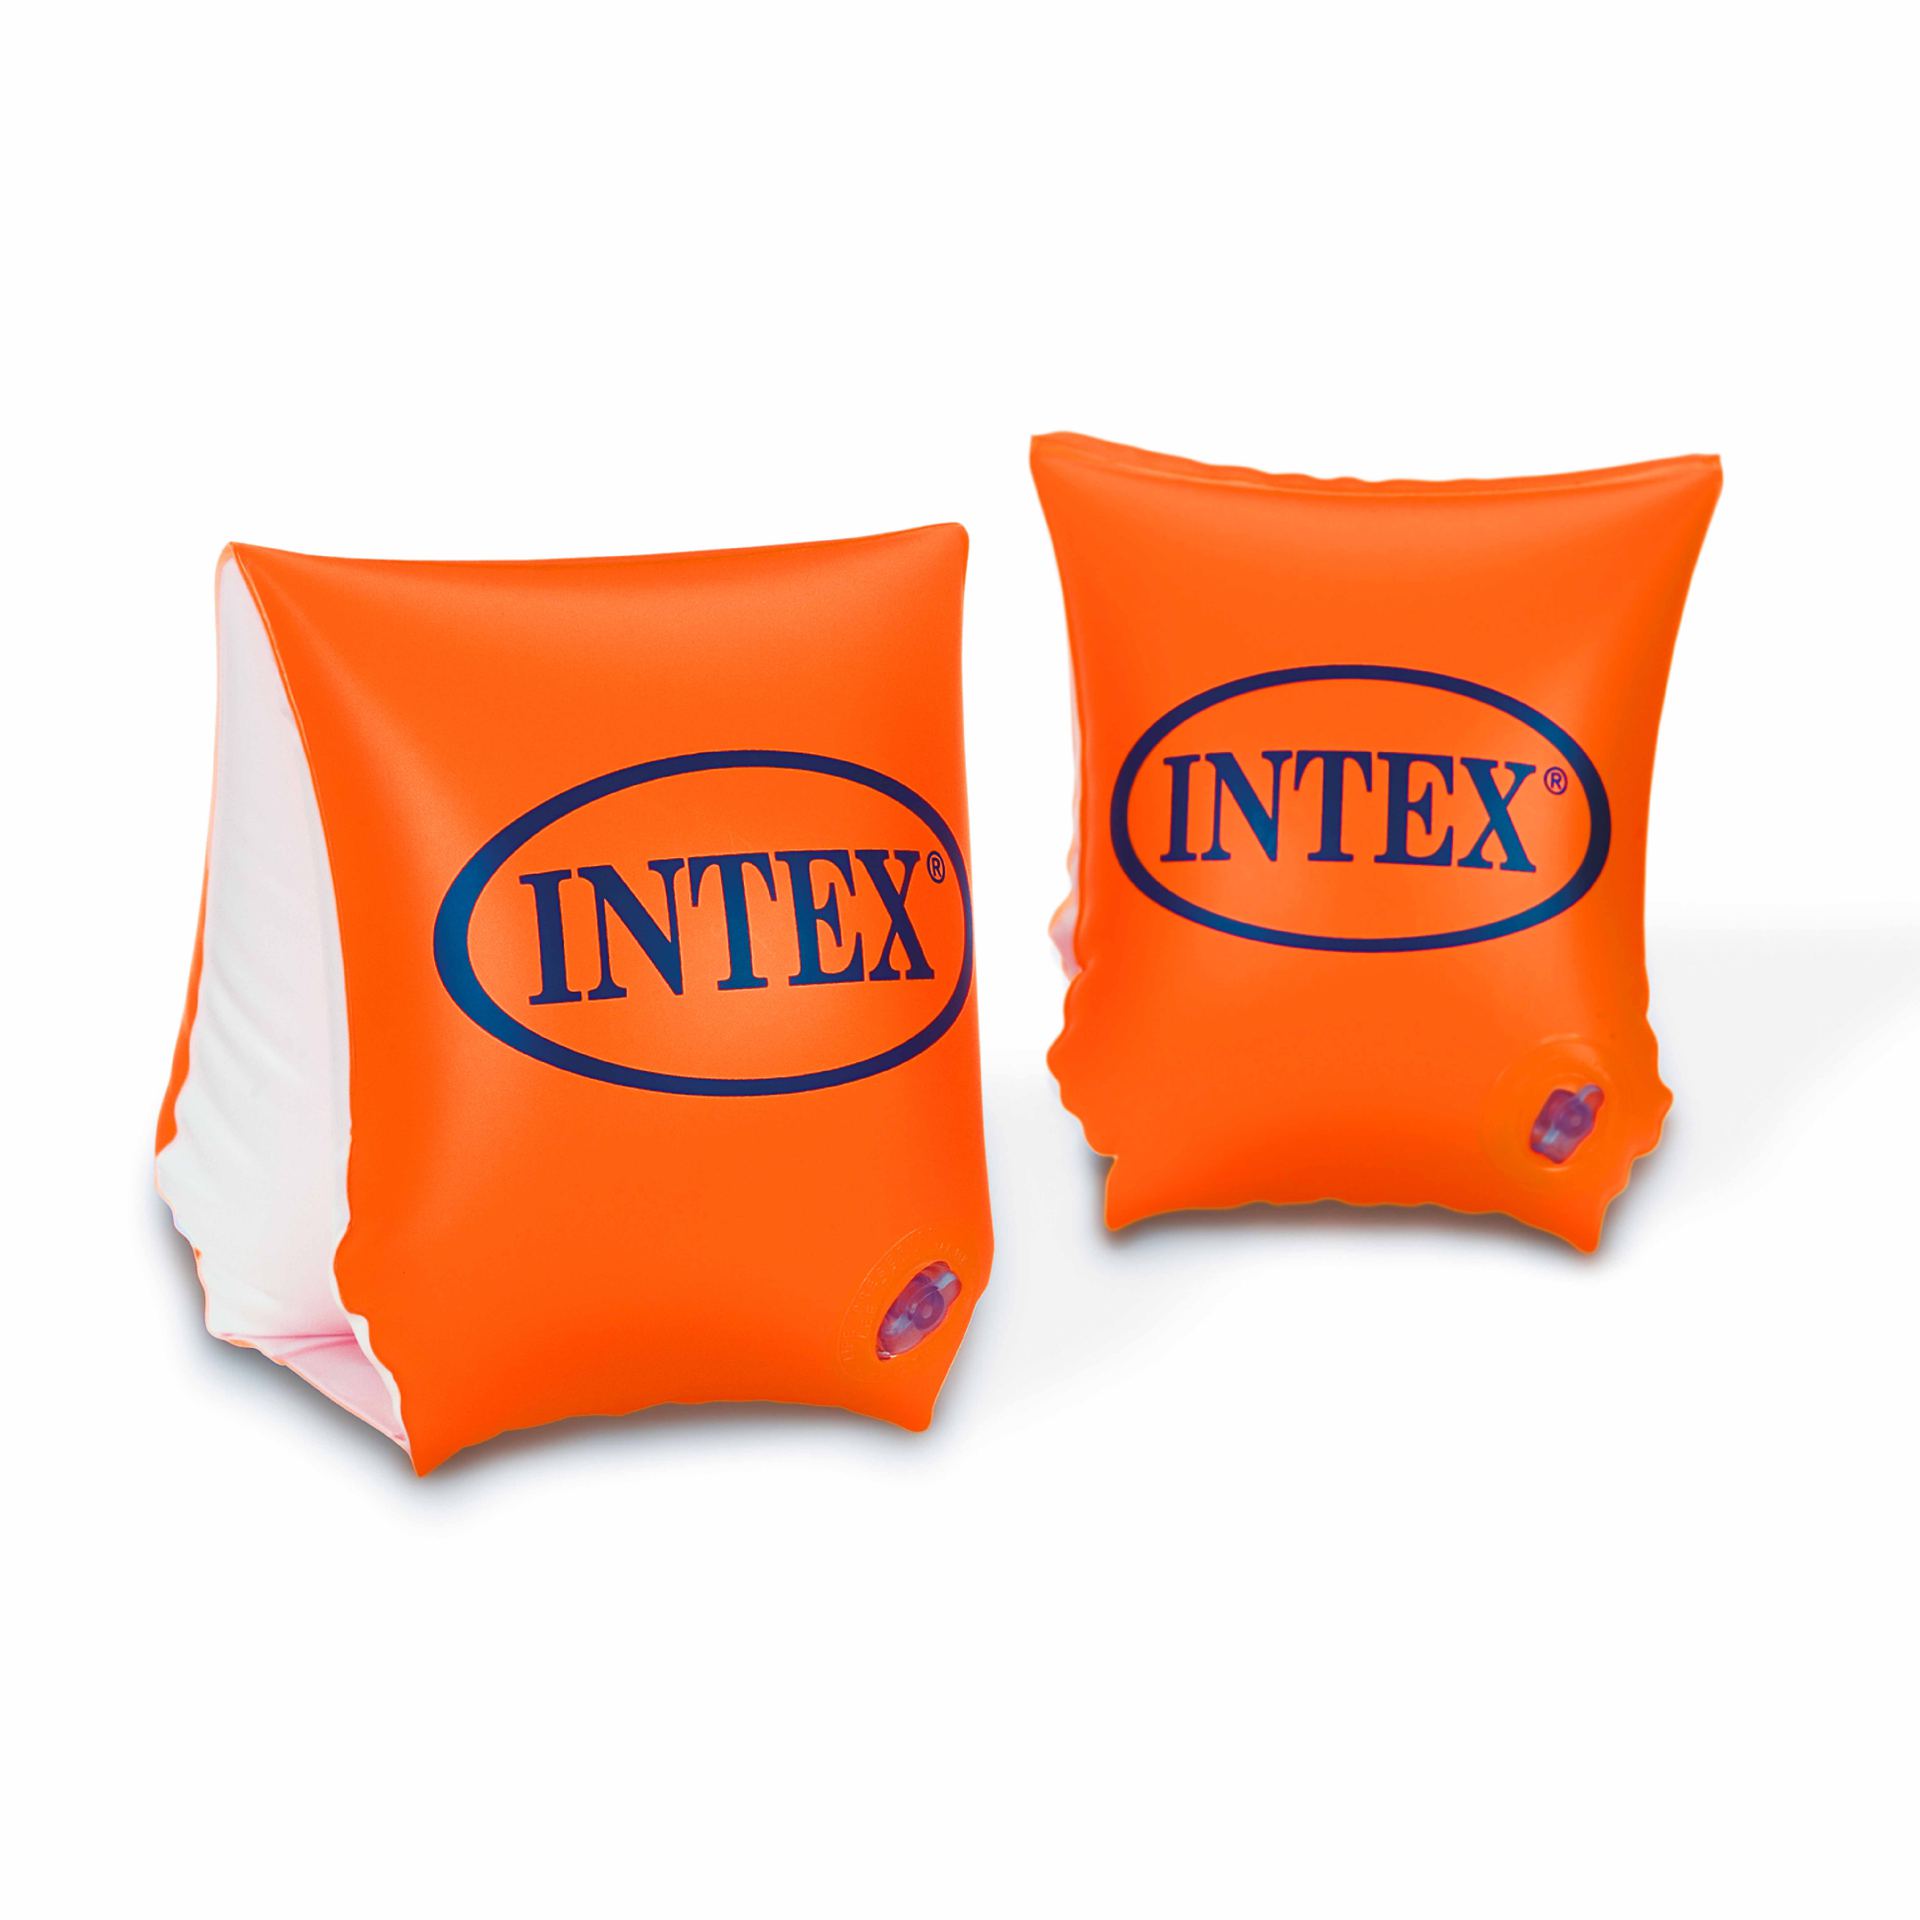 Intex zwembandjes - 23cm x 15cm